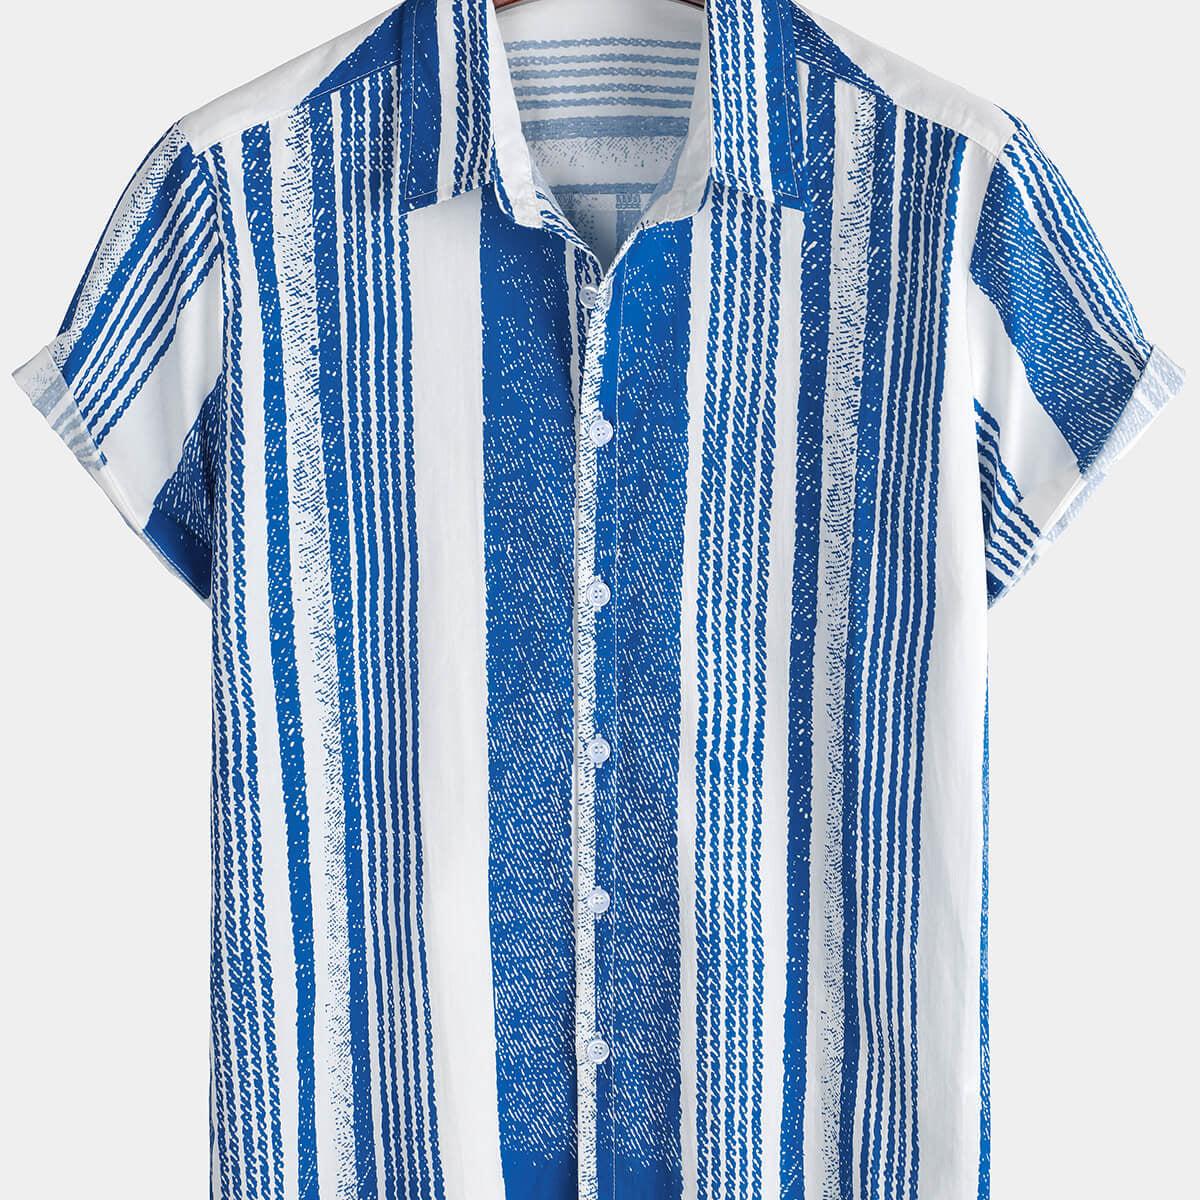 Men's Cotton Vintage Casual Blue Striped Summer Short Sleeve Shirt